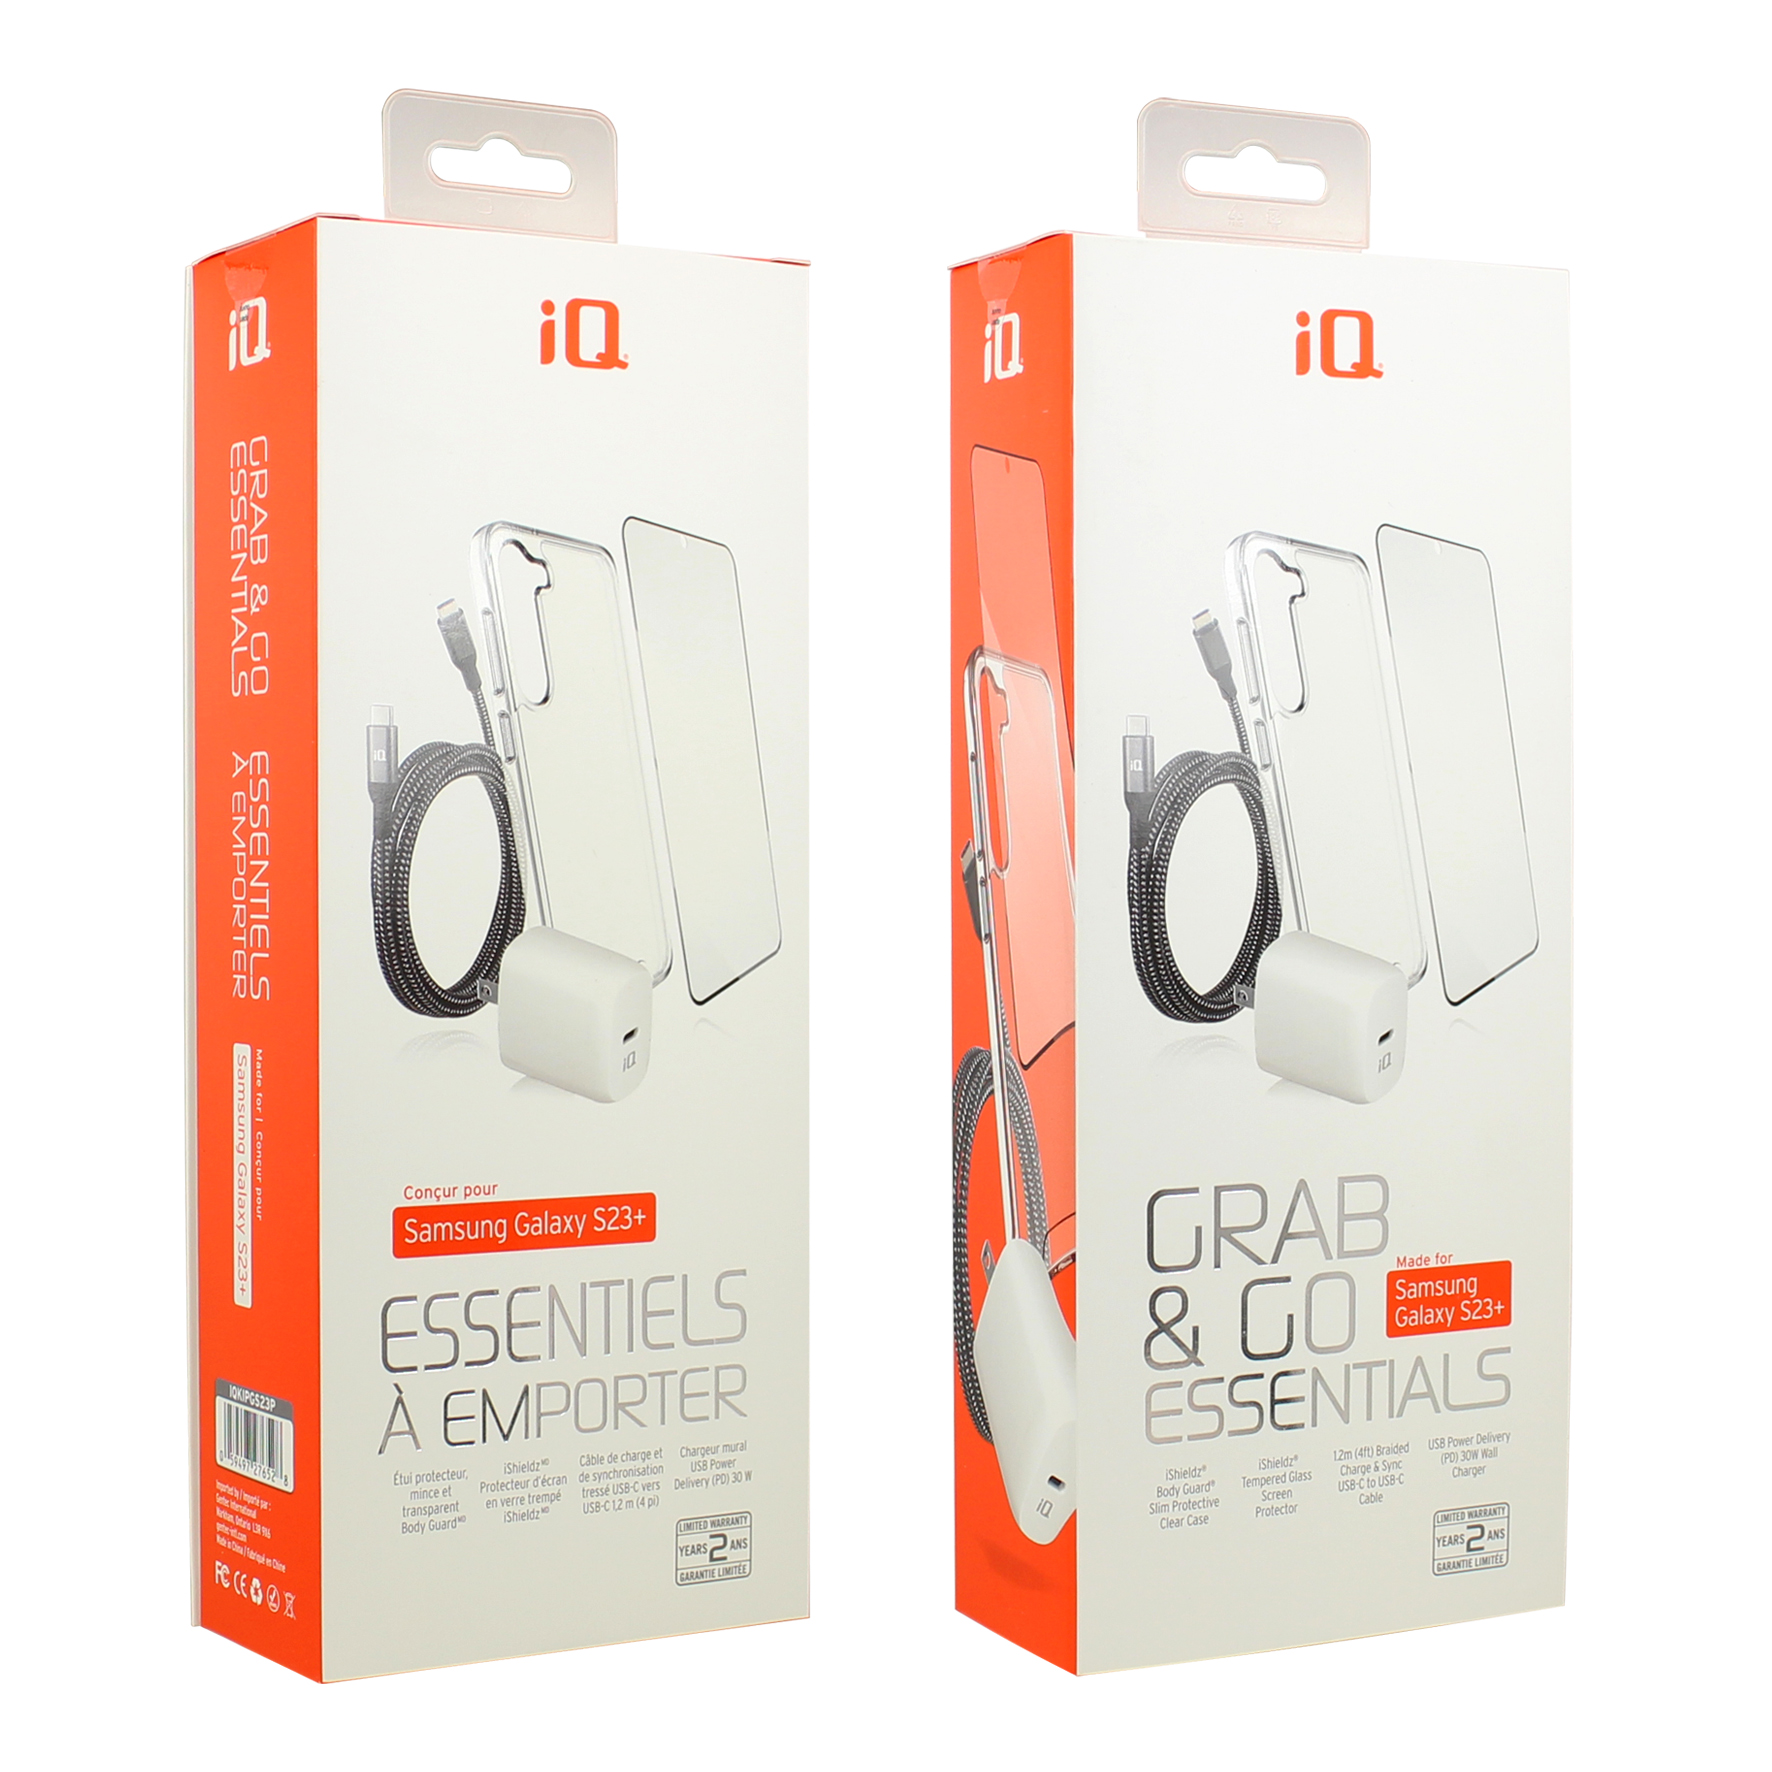 iQ Grab & Go Essentials for Samsung Galaxy S23+